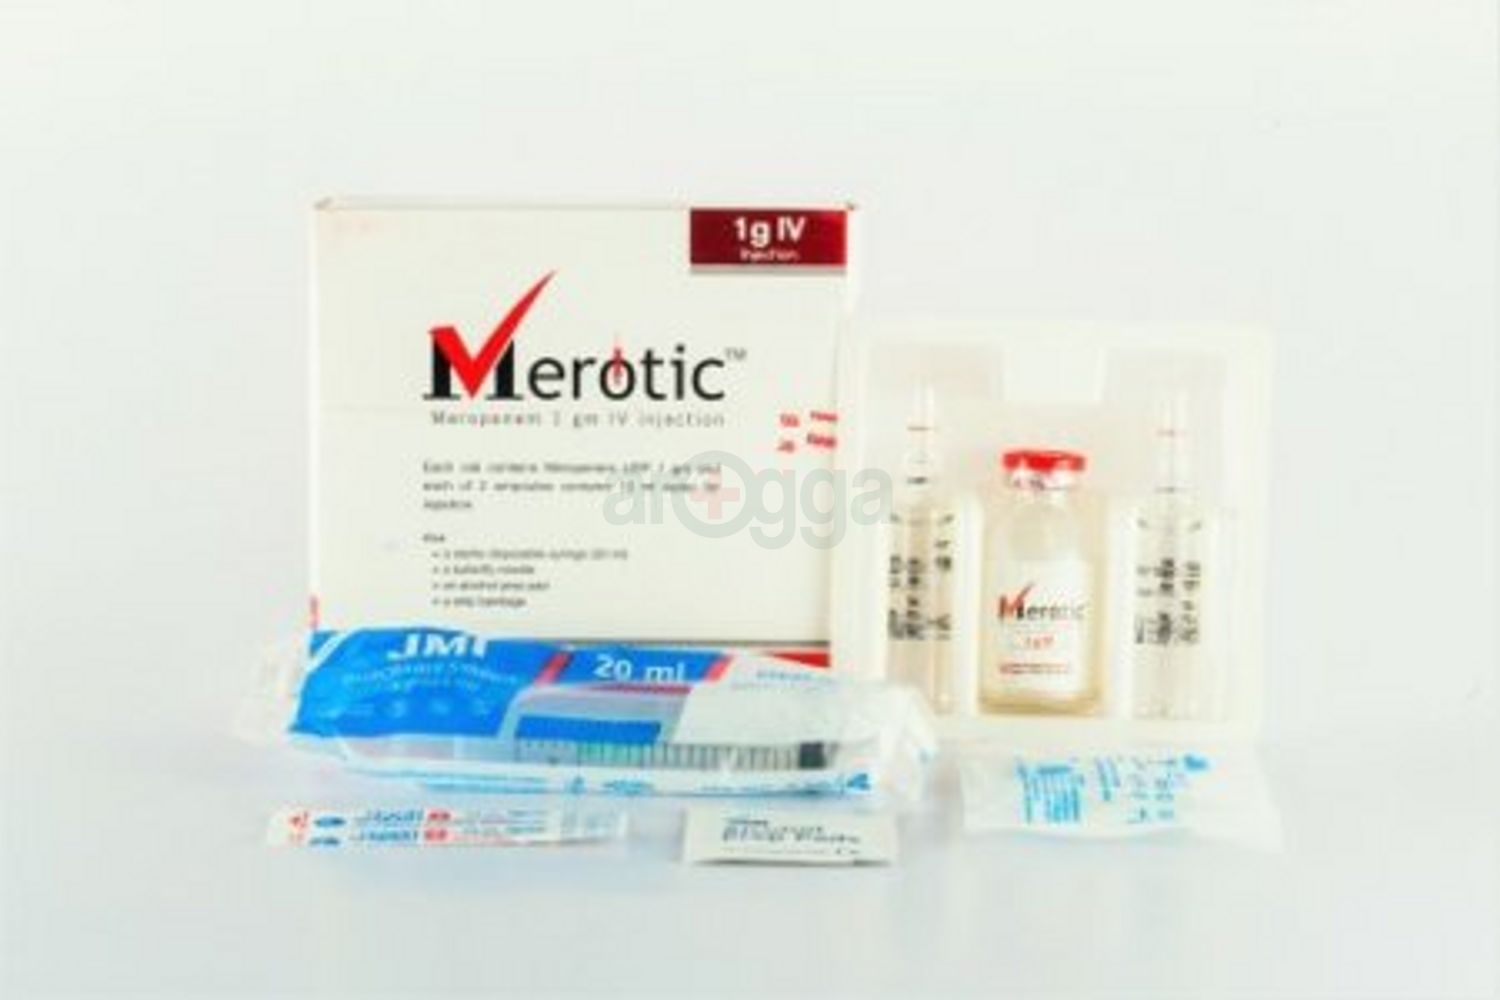 Merotic 1gm IV